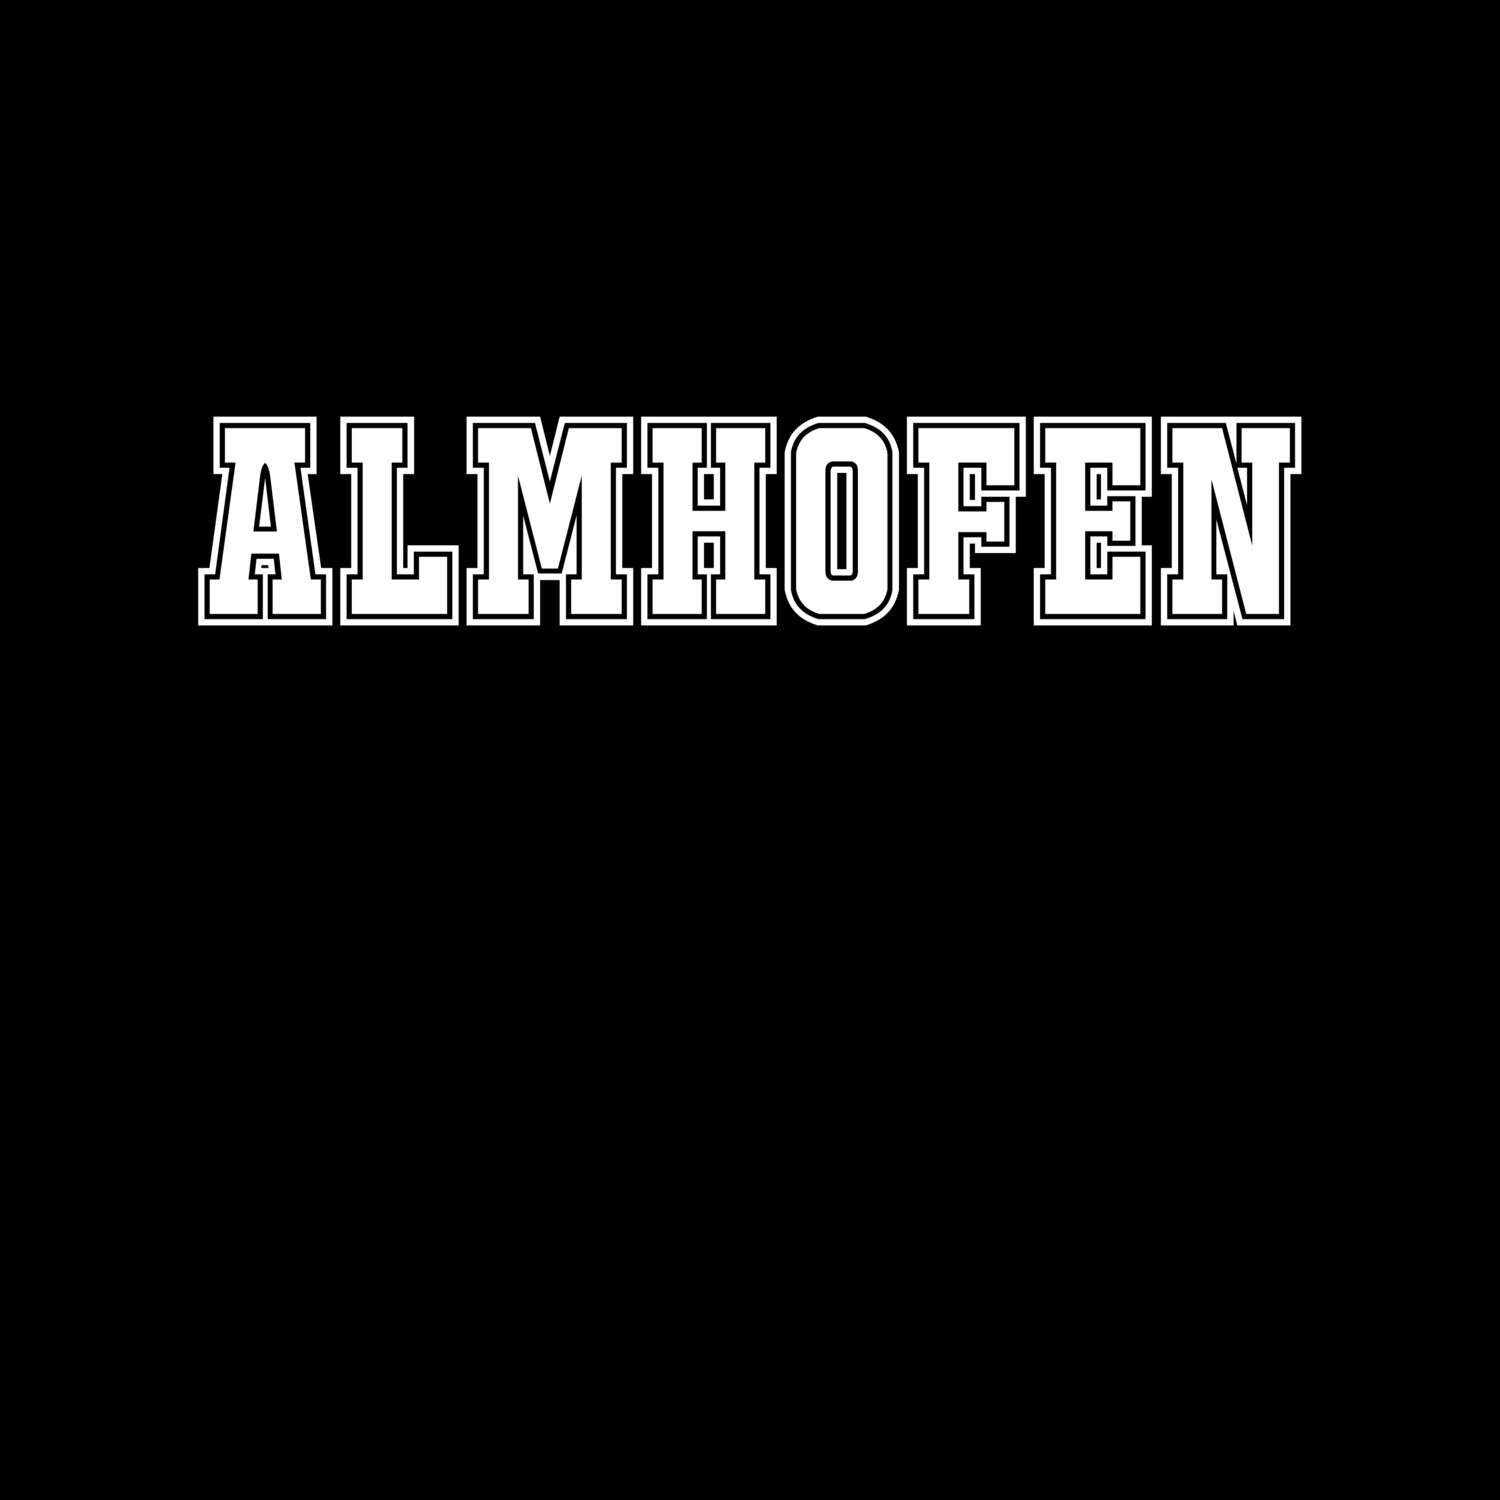 Almhofen T-Shirt »Classic«